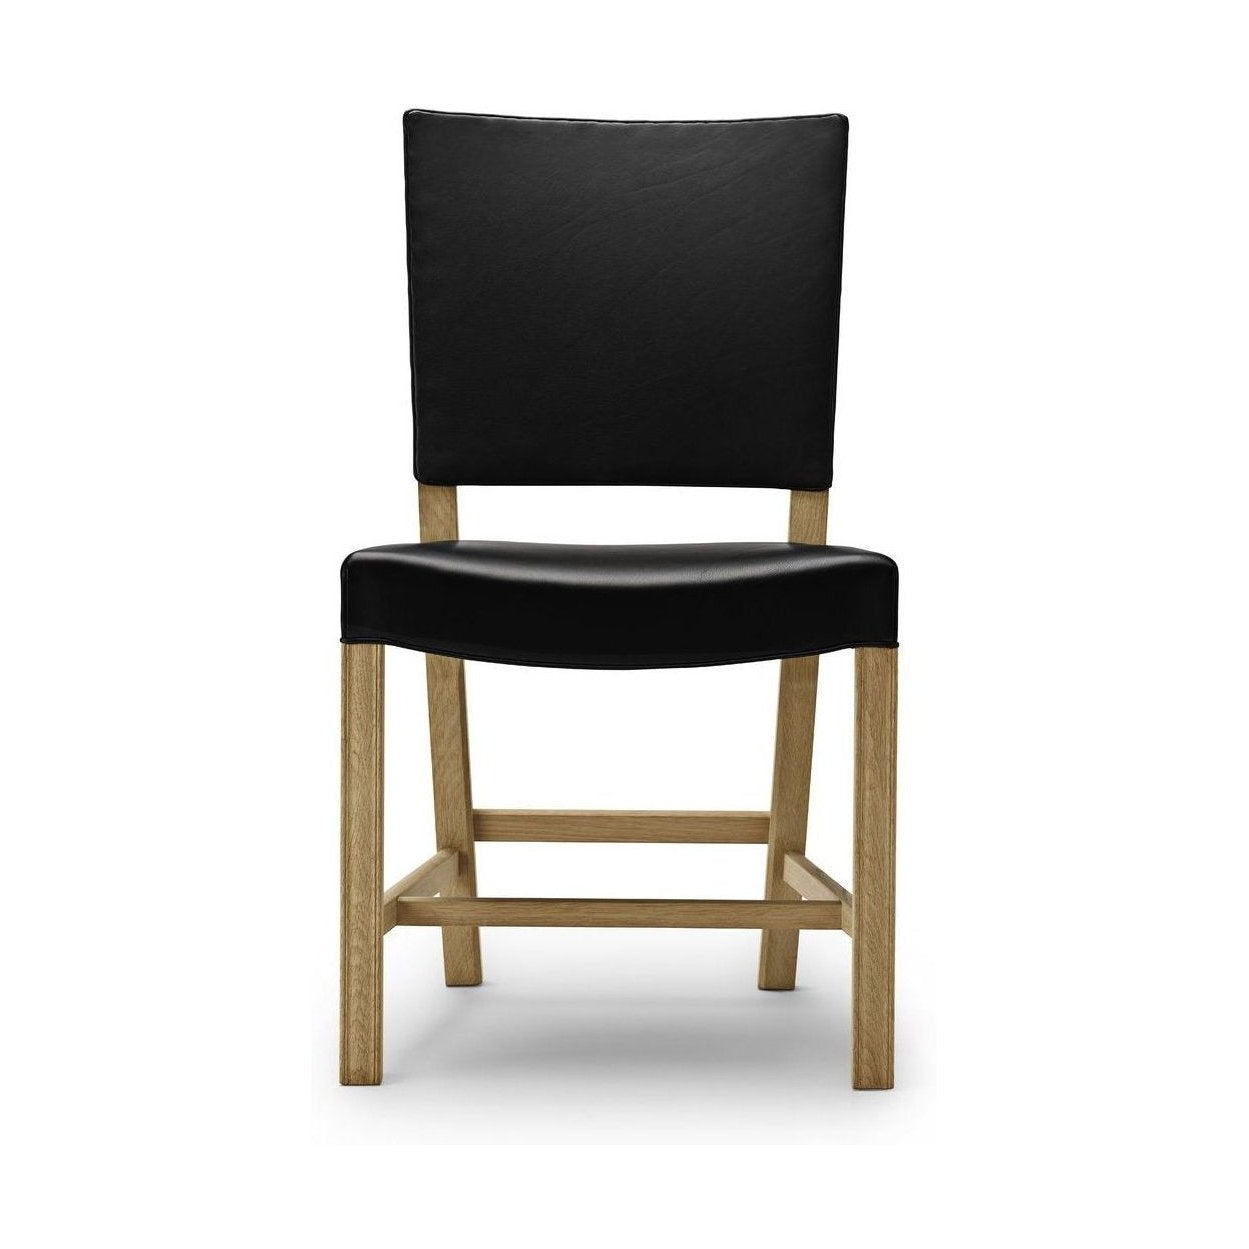 Carl Hansen KK39490 Liten röd stol, ekvålat/svart läder